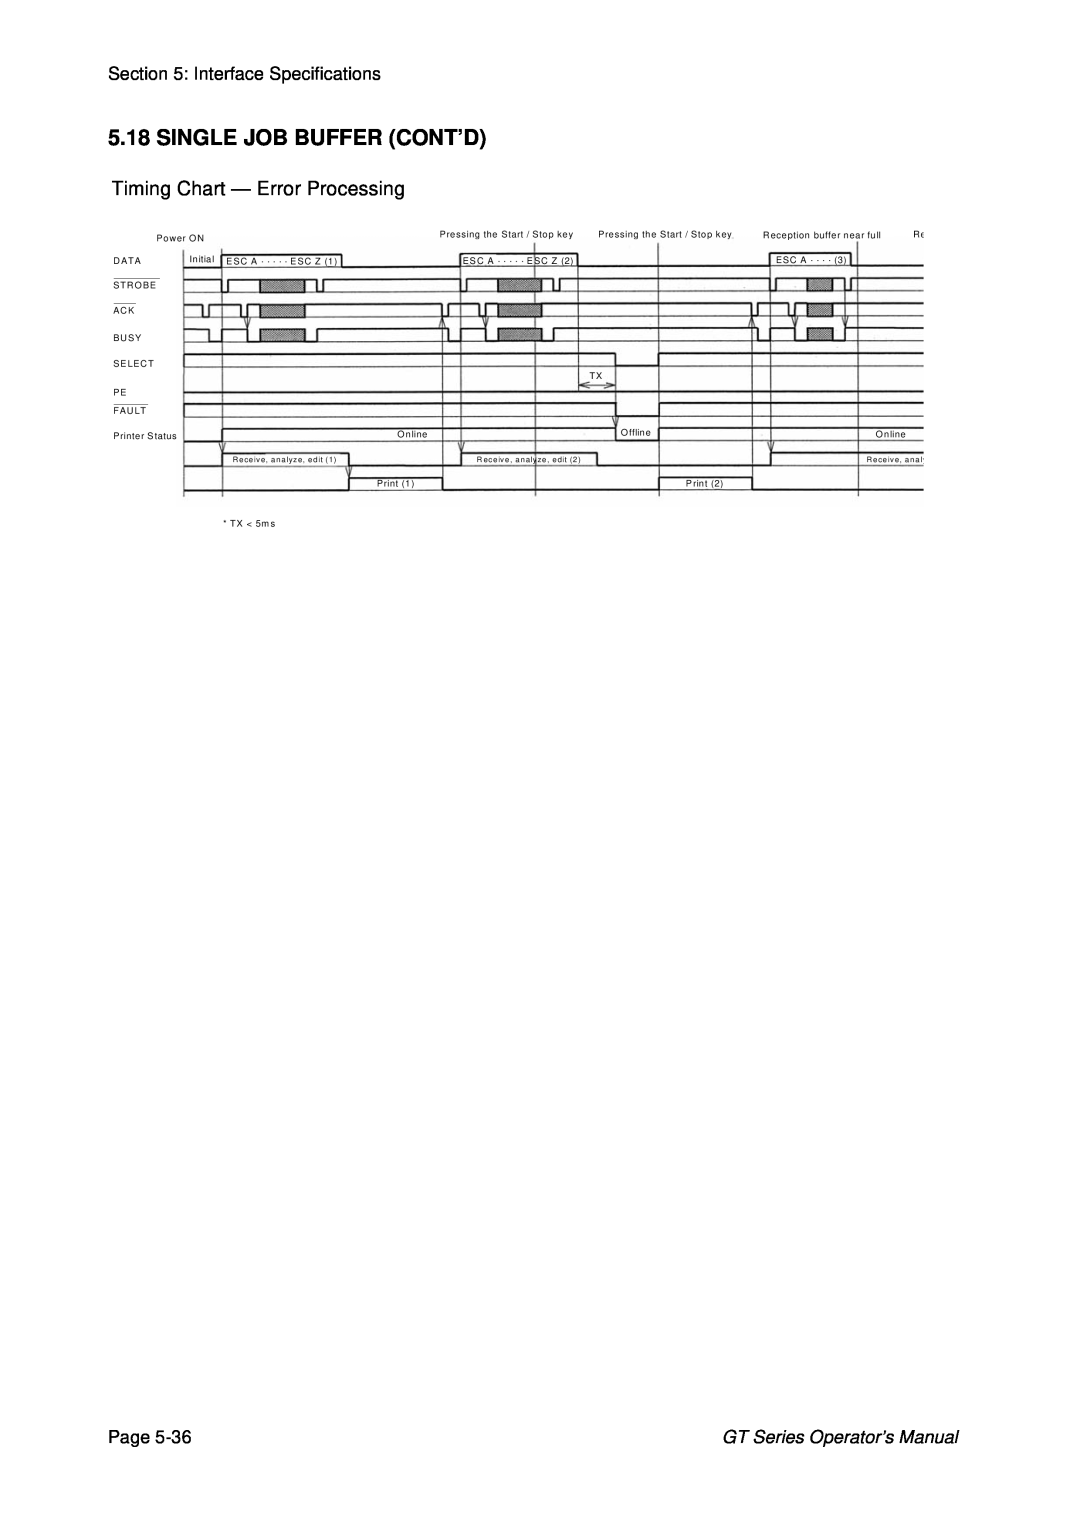 SATO GT424 manual Single Job Buffer Cont’D, Timing Chart - Error Processing, GT Series Operator’s Manual 